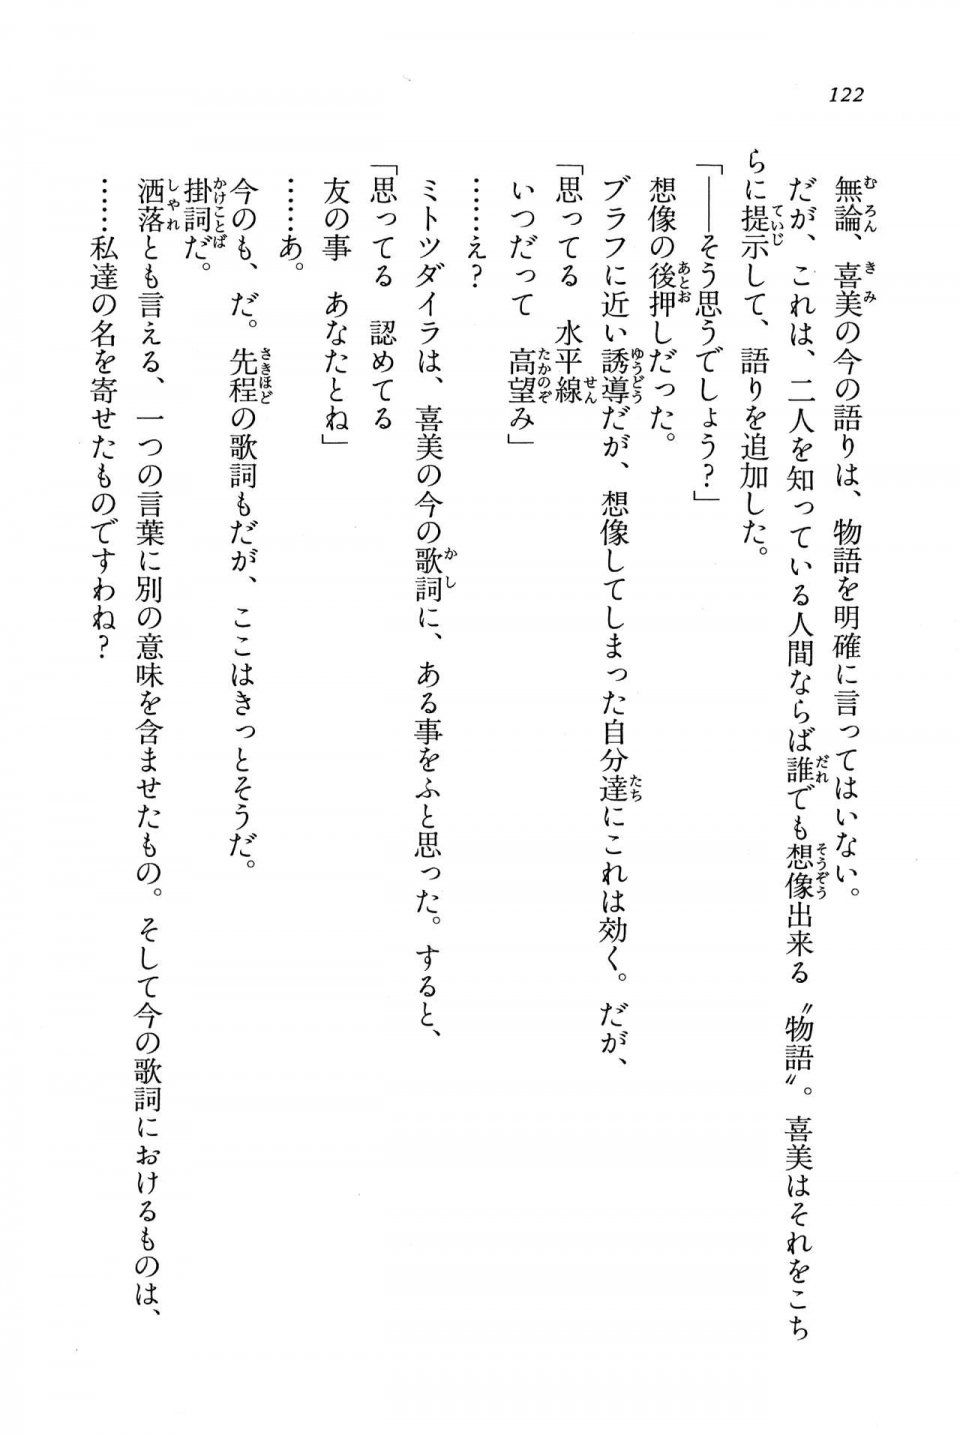 Kyoukai Senjou no Horizon BD Special Mininovel Vol 7(4A) - Photo #126